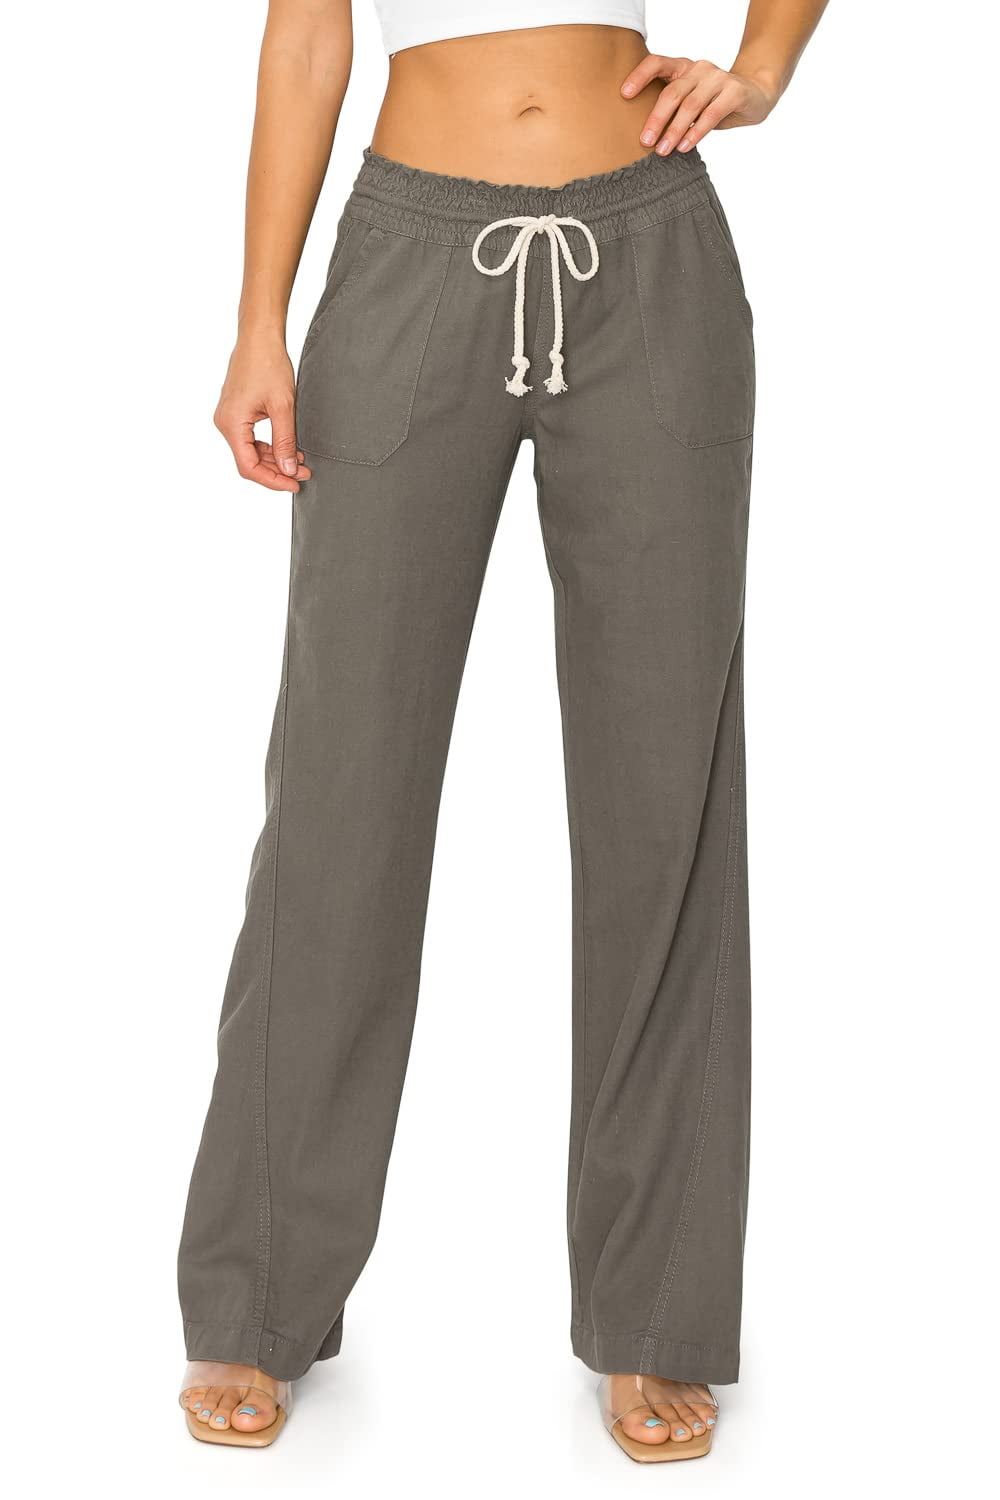 Cali1850 Women's Casual Linen Pants - 32 Inseam Oceanside